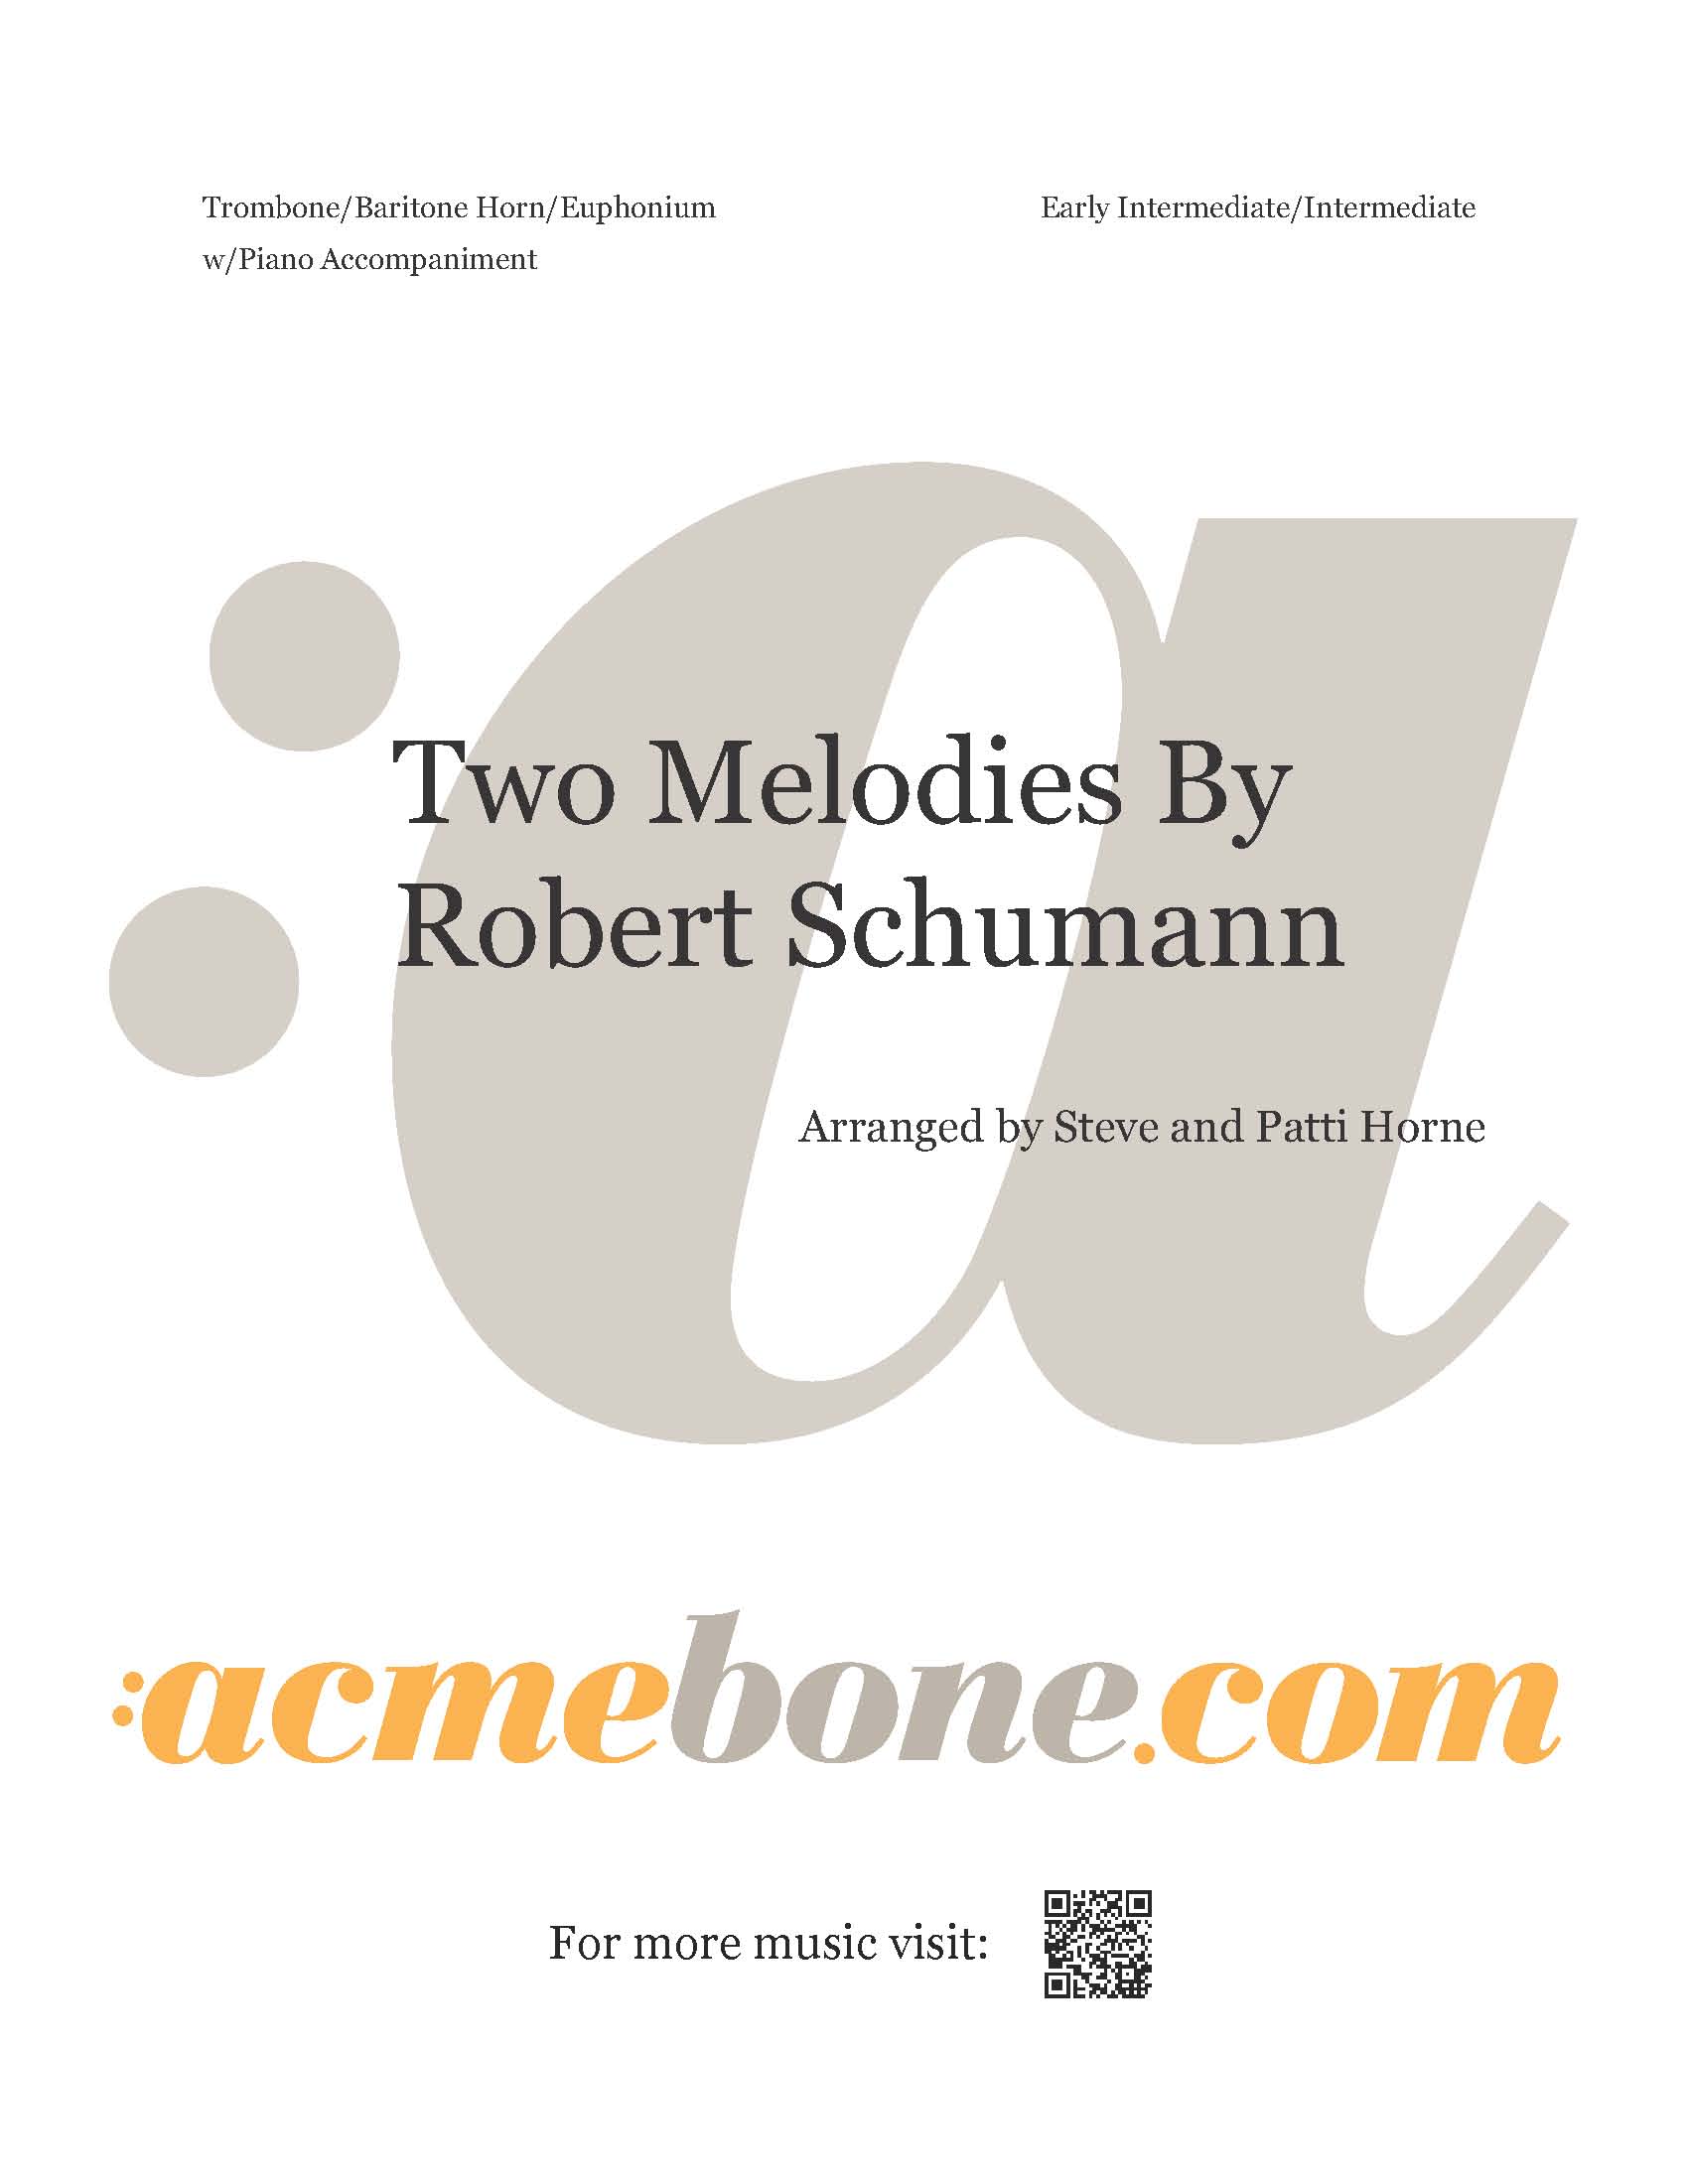 Two Melodies By Robert Schumann_digital_cover.jpg